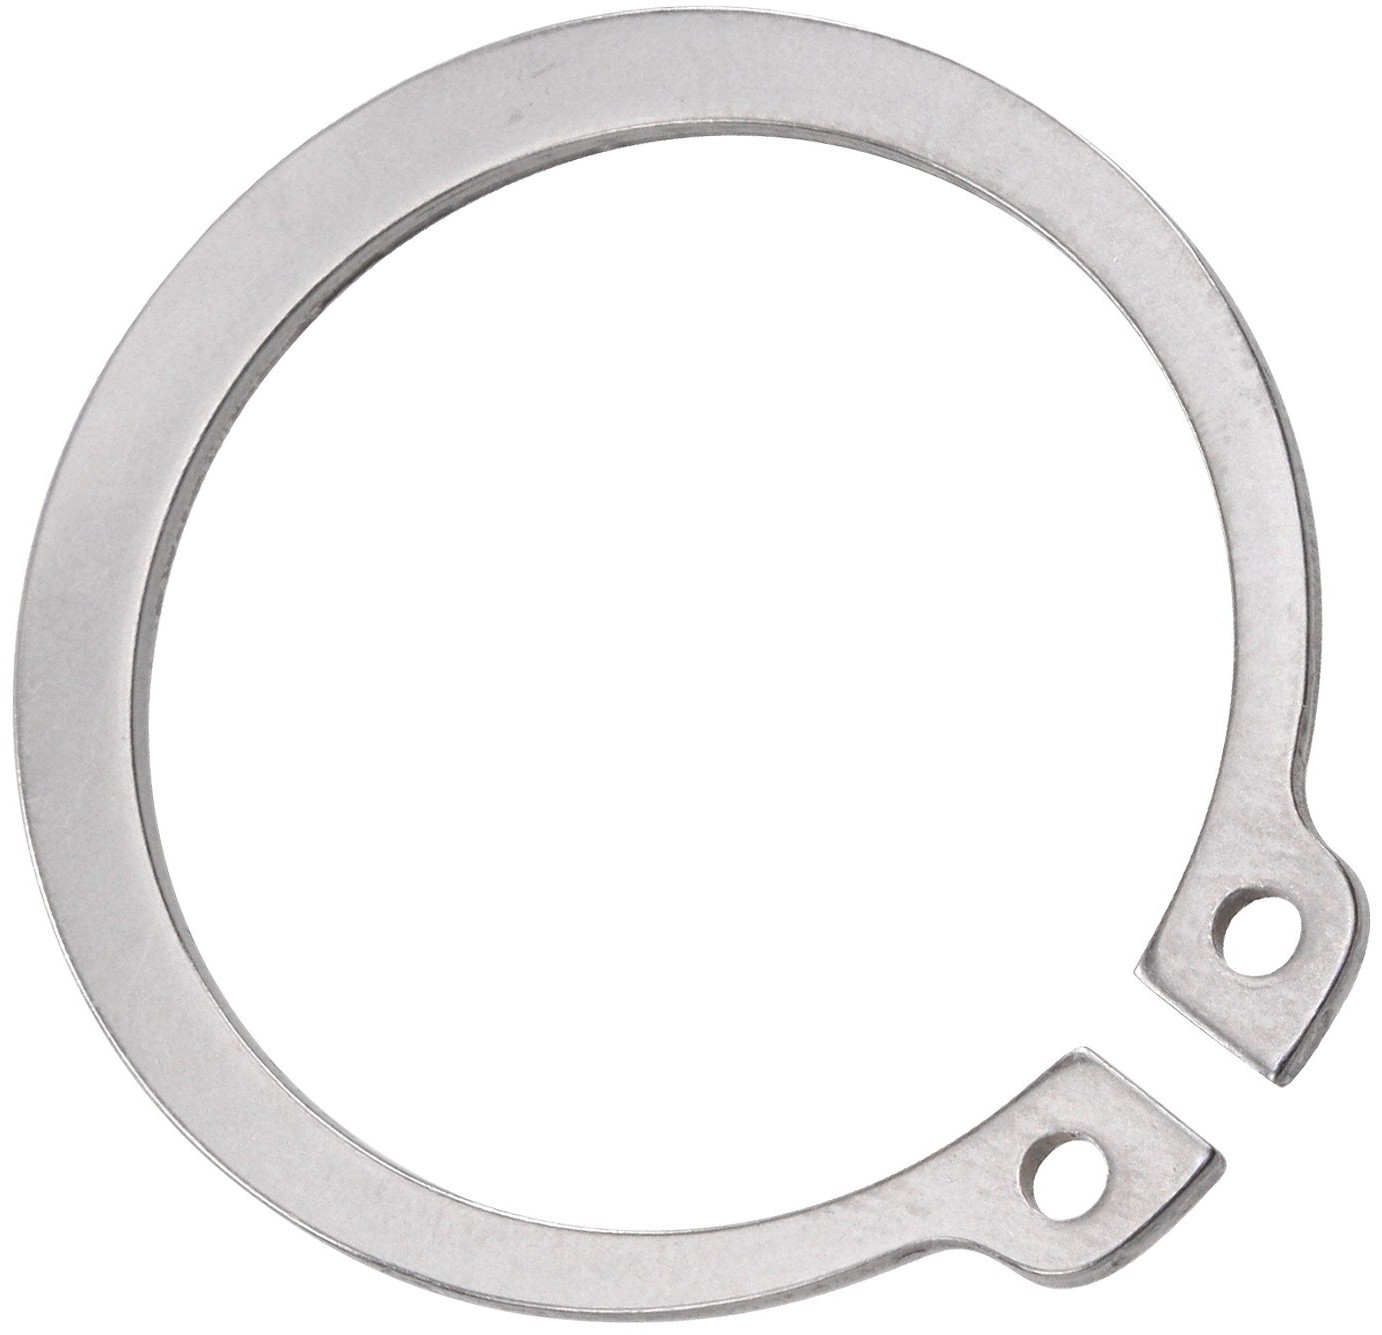 Кольцо стопорное наружное 155х4 DIN 471, нержавеющая сталь 1.4122 (А2) - фото